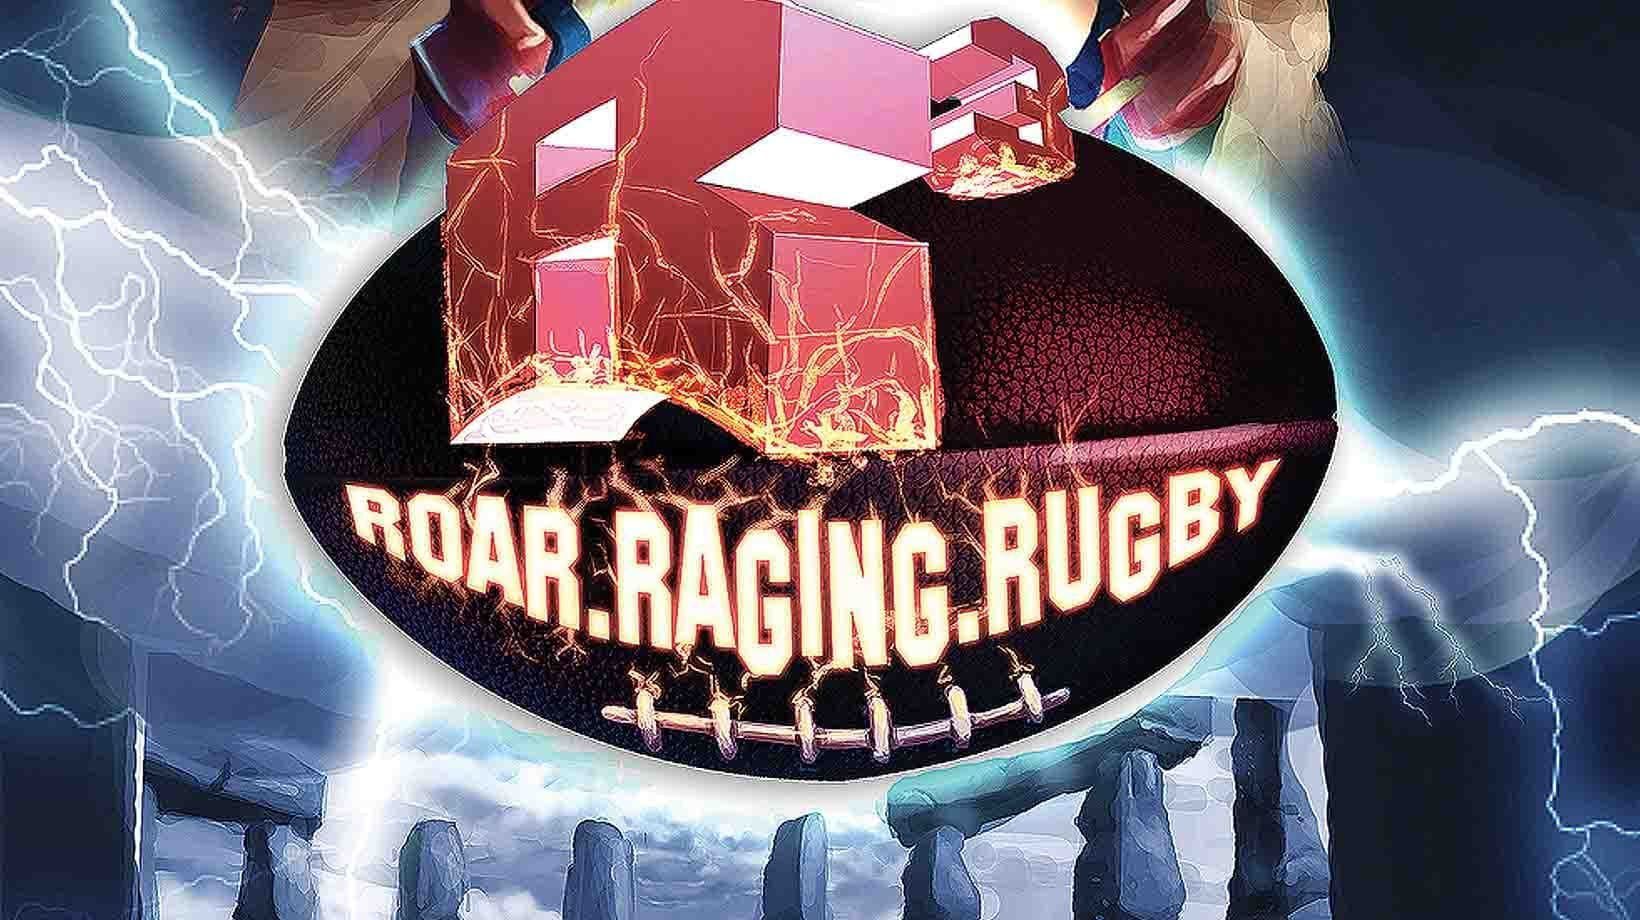 R3_Roar_raging_rugby